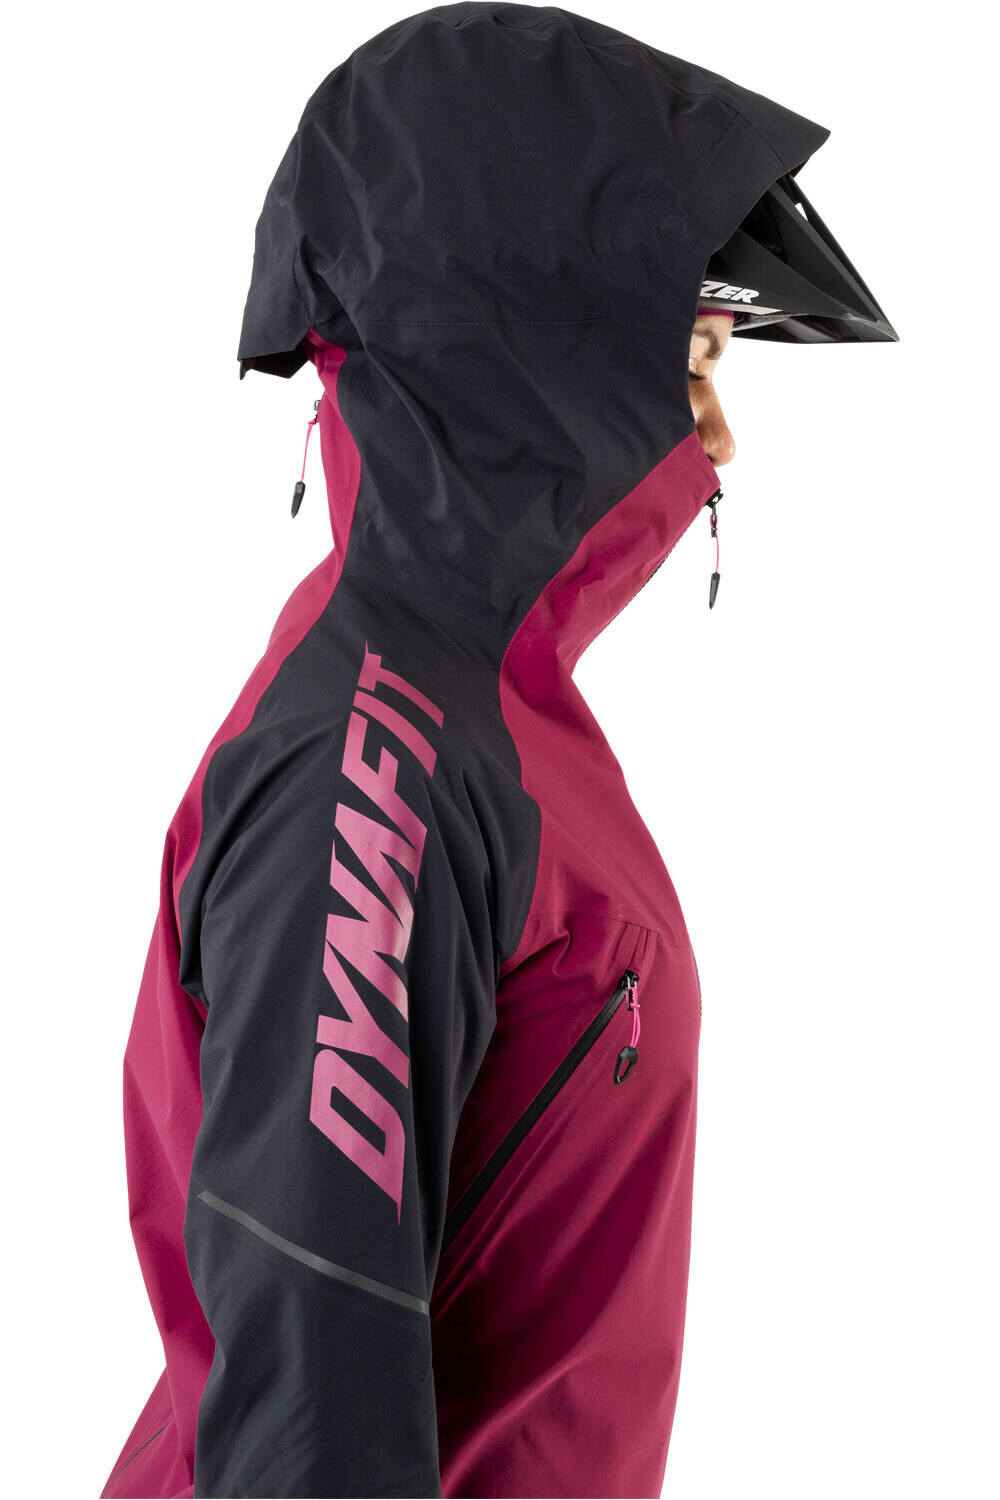 Dynafit chaqueta impermeable ciclismo mujer RIDE 3L W JKT vista detalle